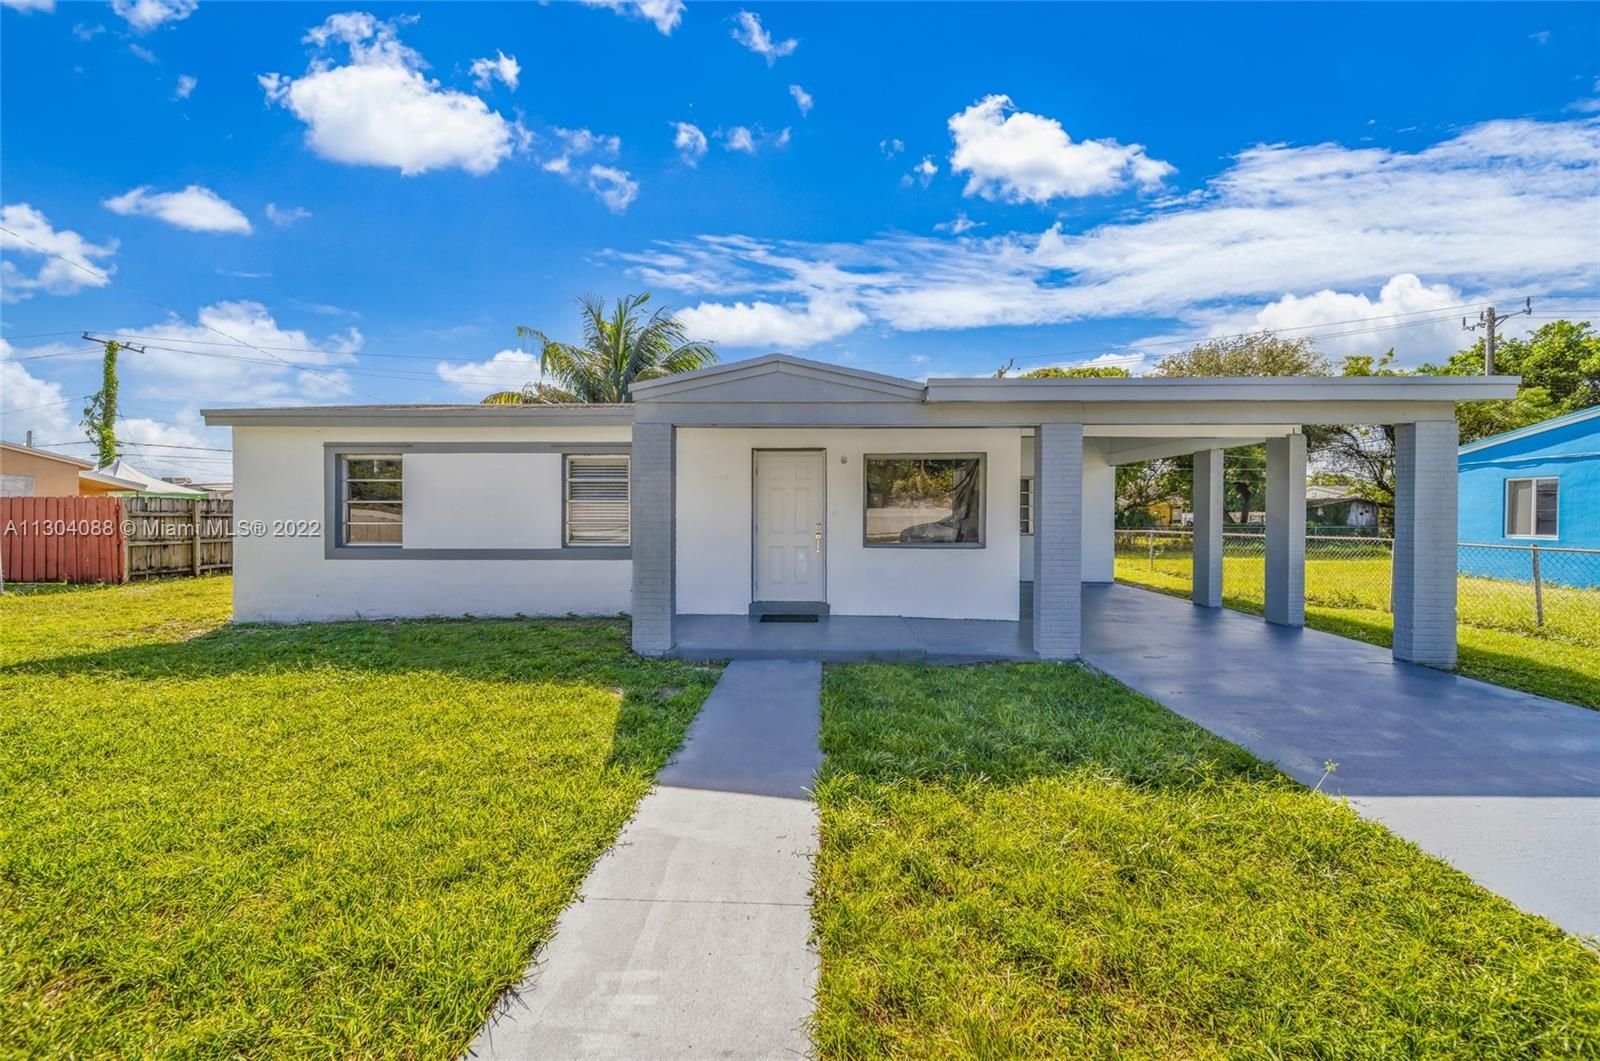 Real estate property located at 1750 167th St, Miami-Dade County, Miami Gardens, FL